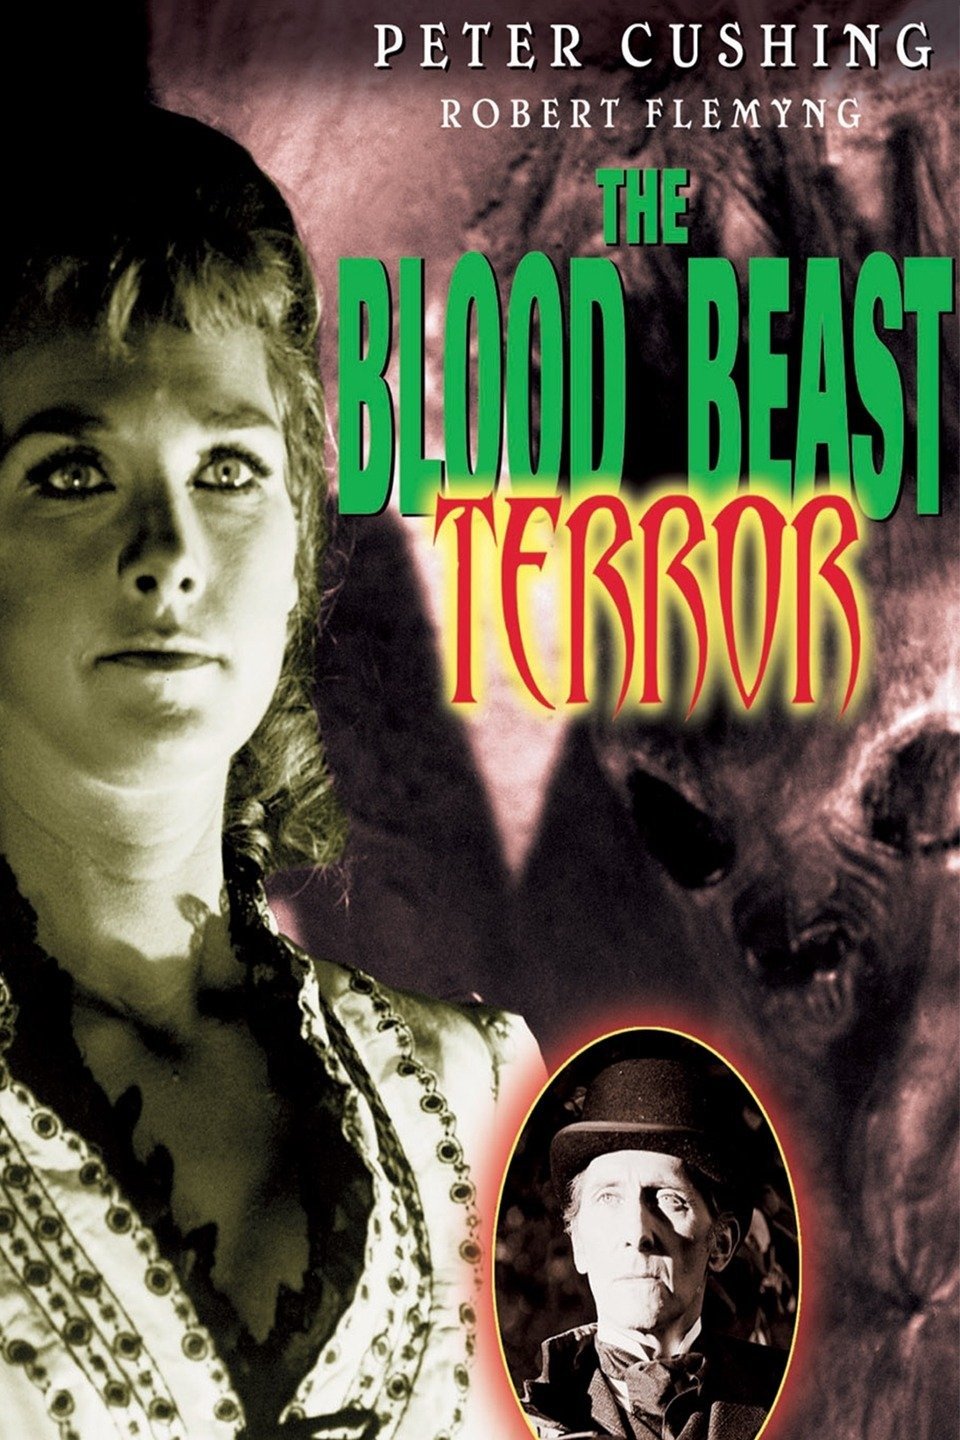 The Blood Beast Terror Movie Reviews